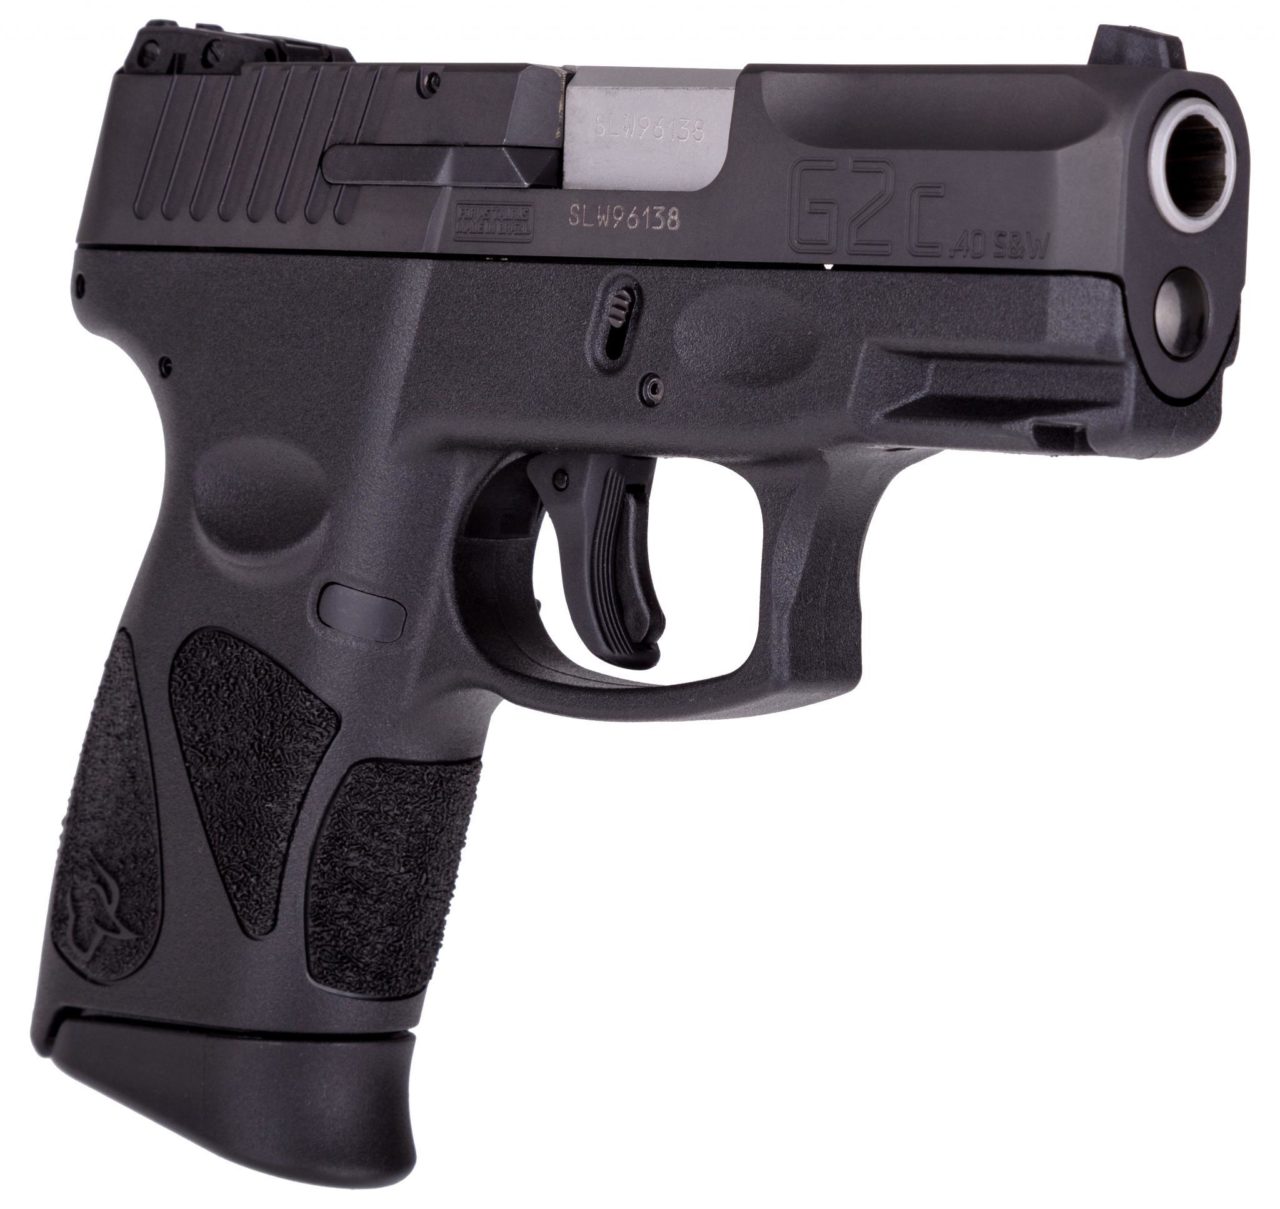 Taurus USA Announces New G2C .40 Caliber Semi-Auto Pistol is Now Shipping